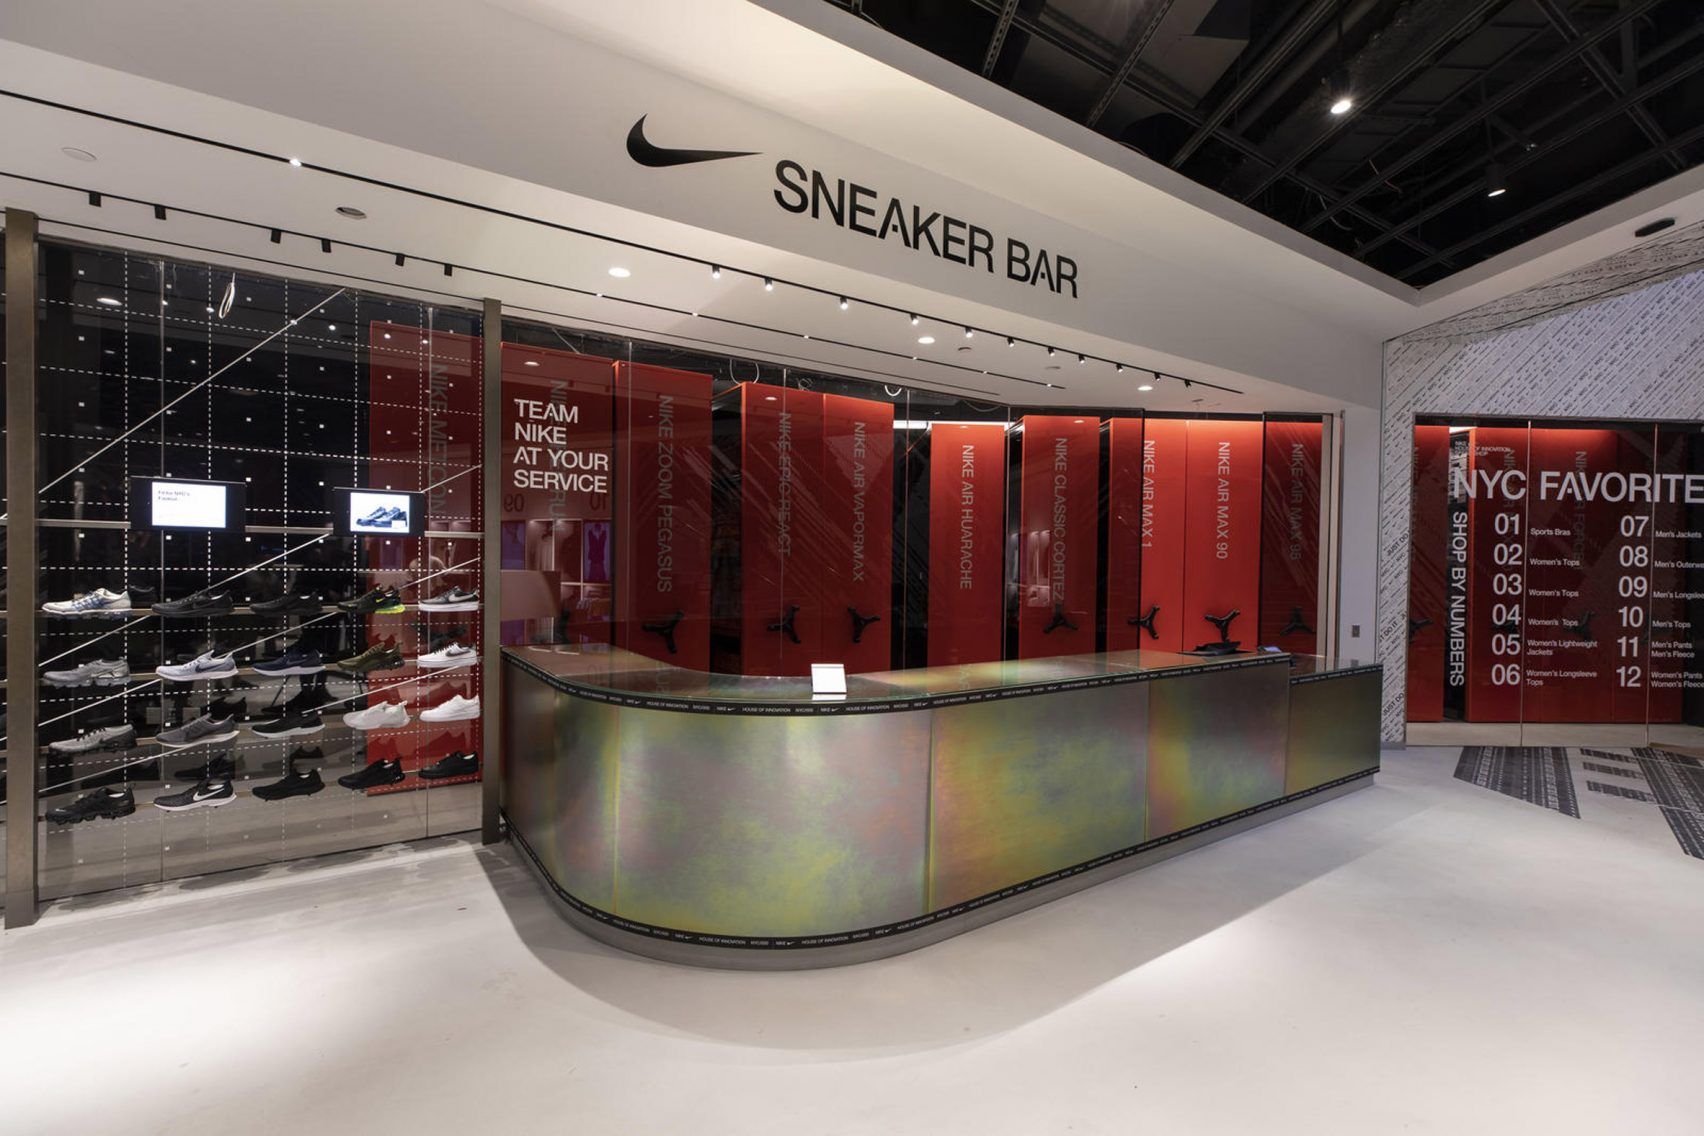 Nike House of Innovation 000, Muncul Di antara Tebing-tebing Beton